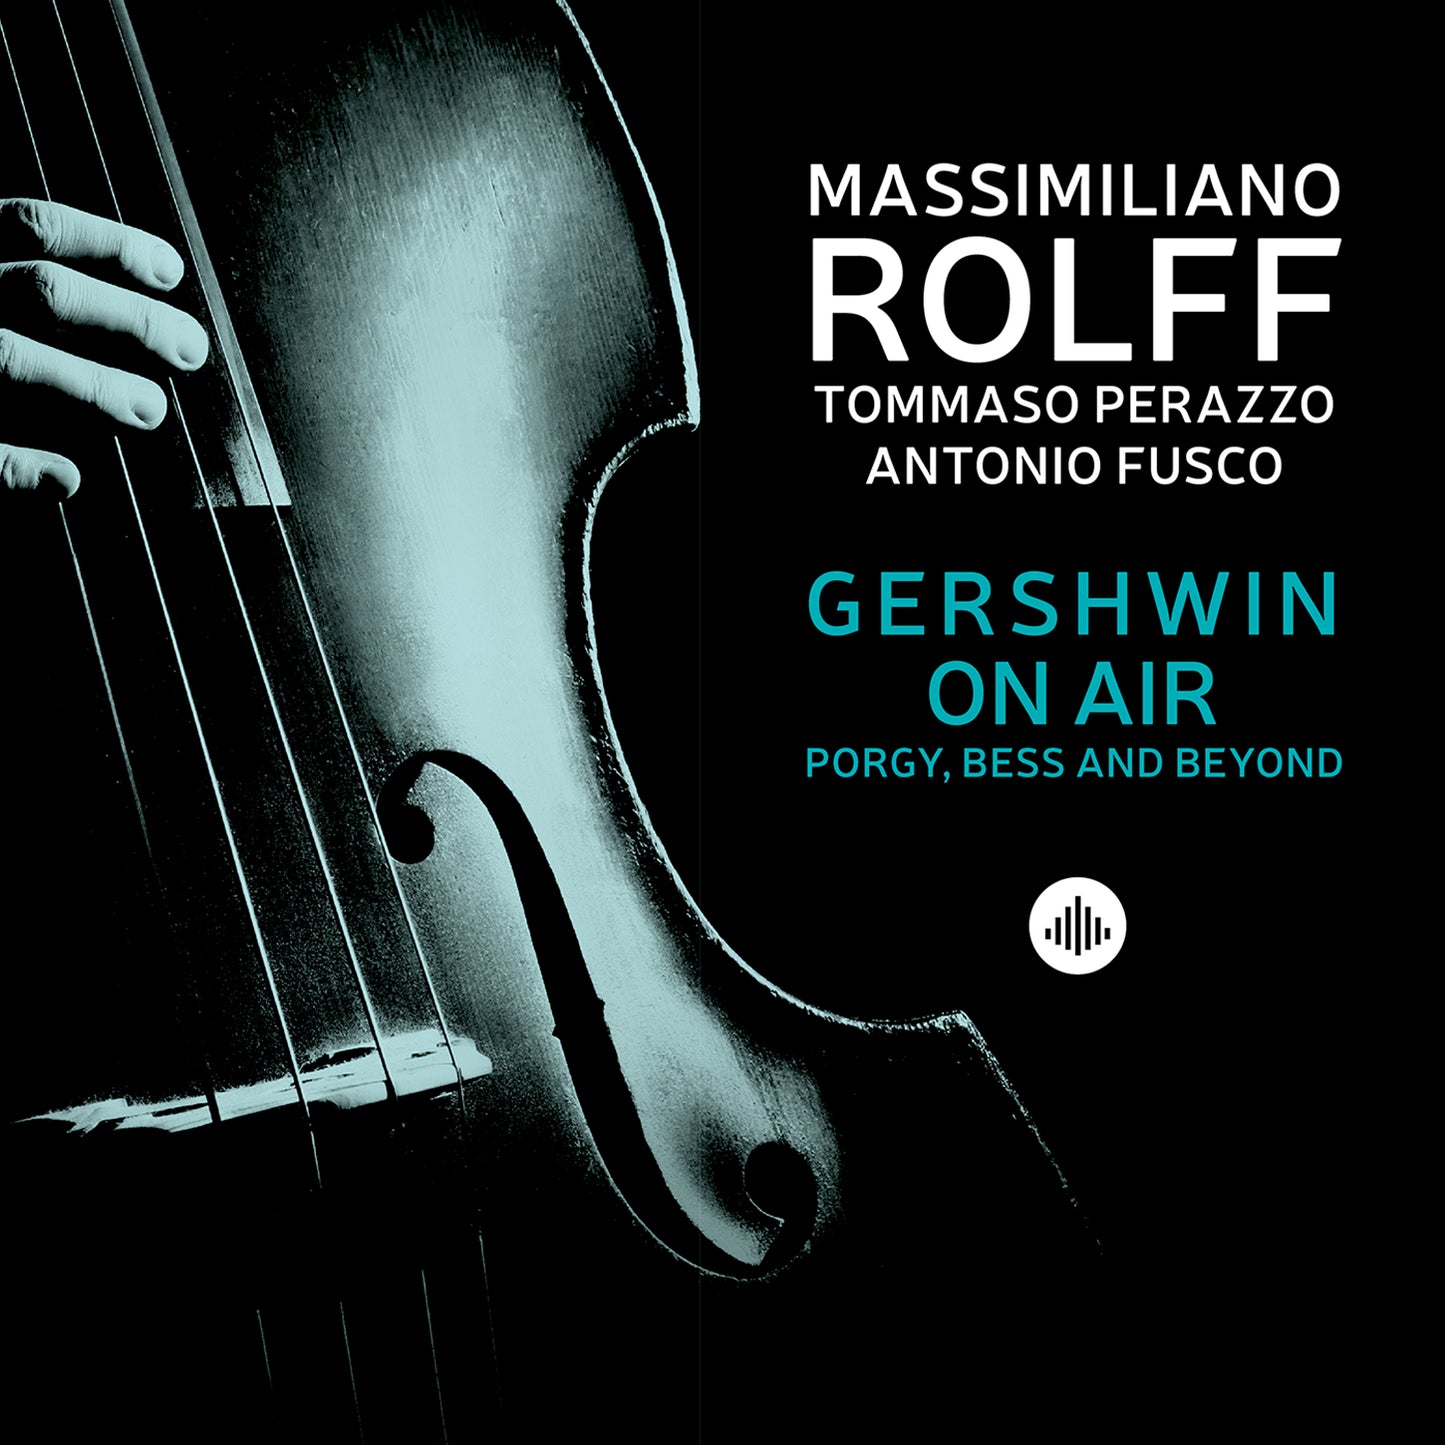 Gershwin On Air: Porgy, Bess And Beyond  Tommaso Perrazo, Massimiliano Rolff, Antonio Fusco